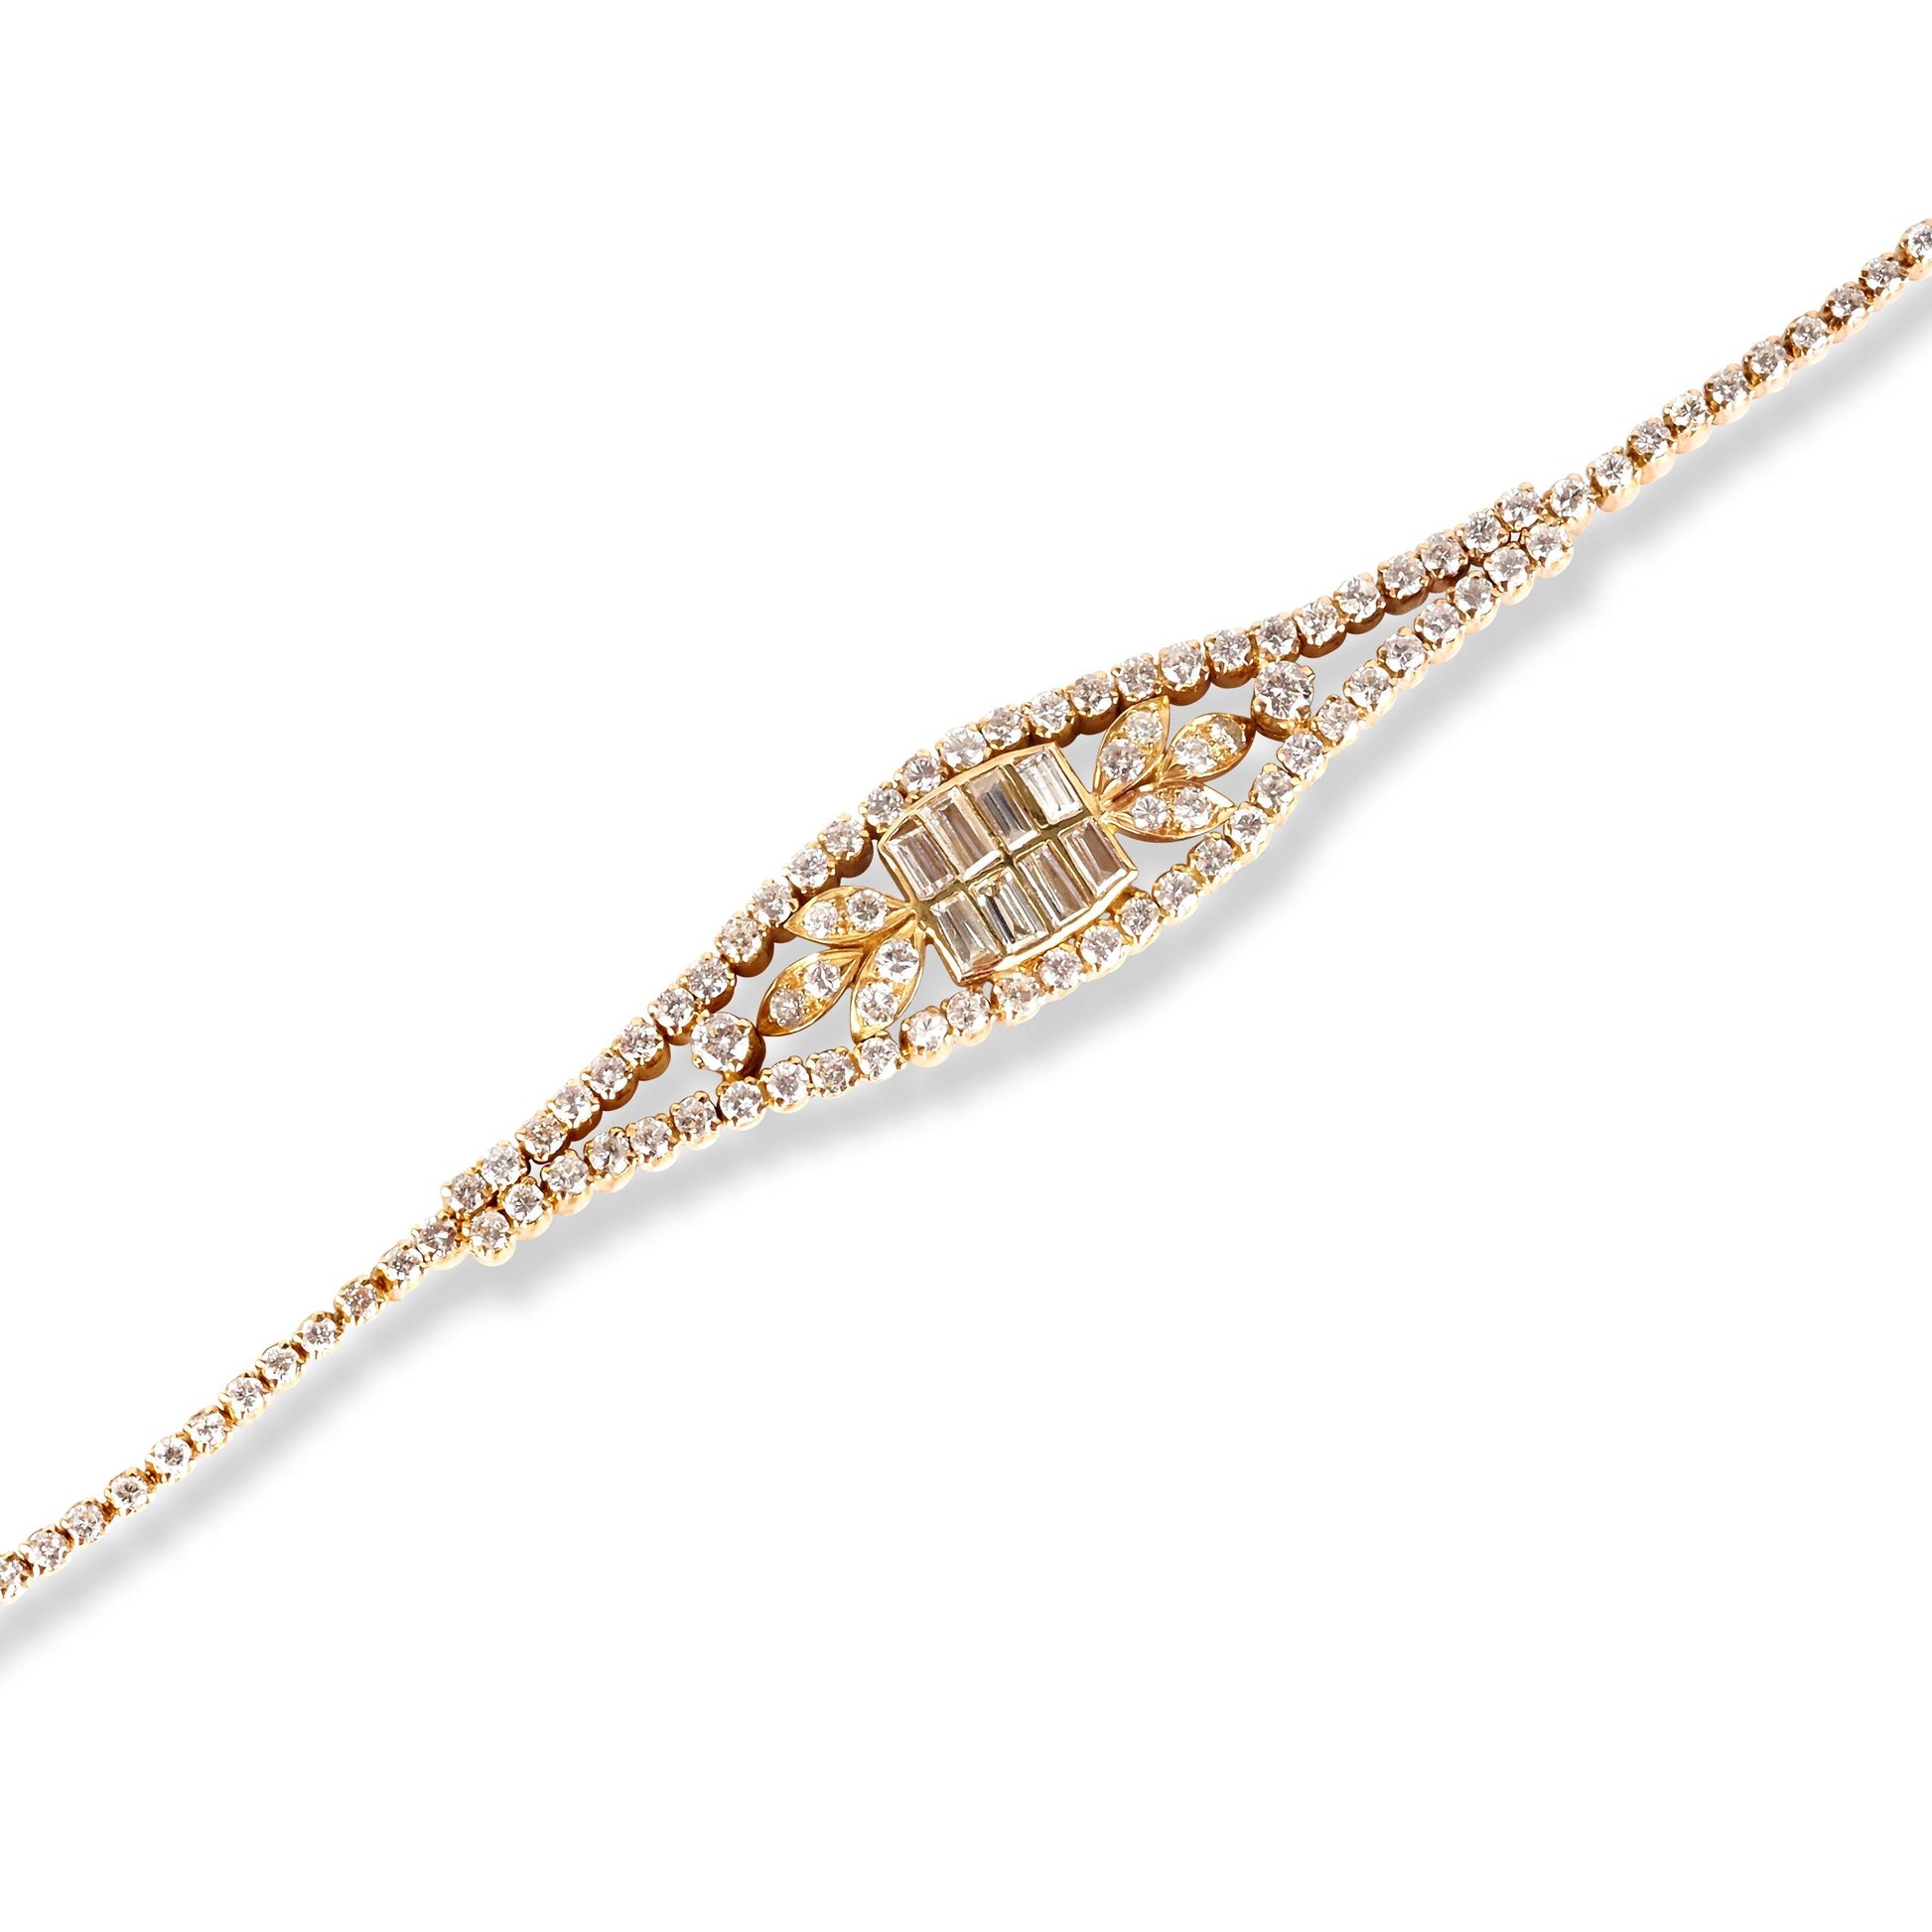 18ct Yellow Gold Diamond Bracelet with Box Clasp BR-8328 - Minar Jewellers